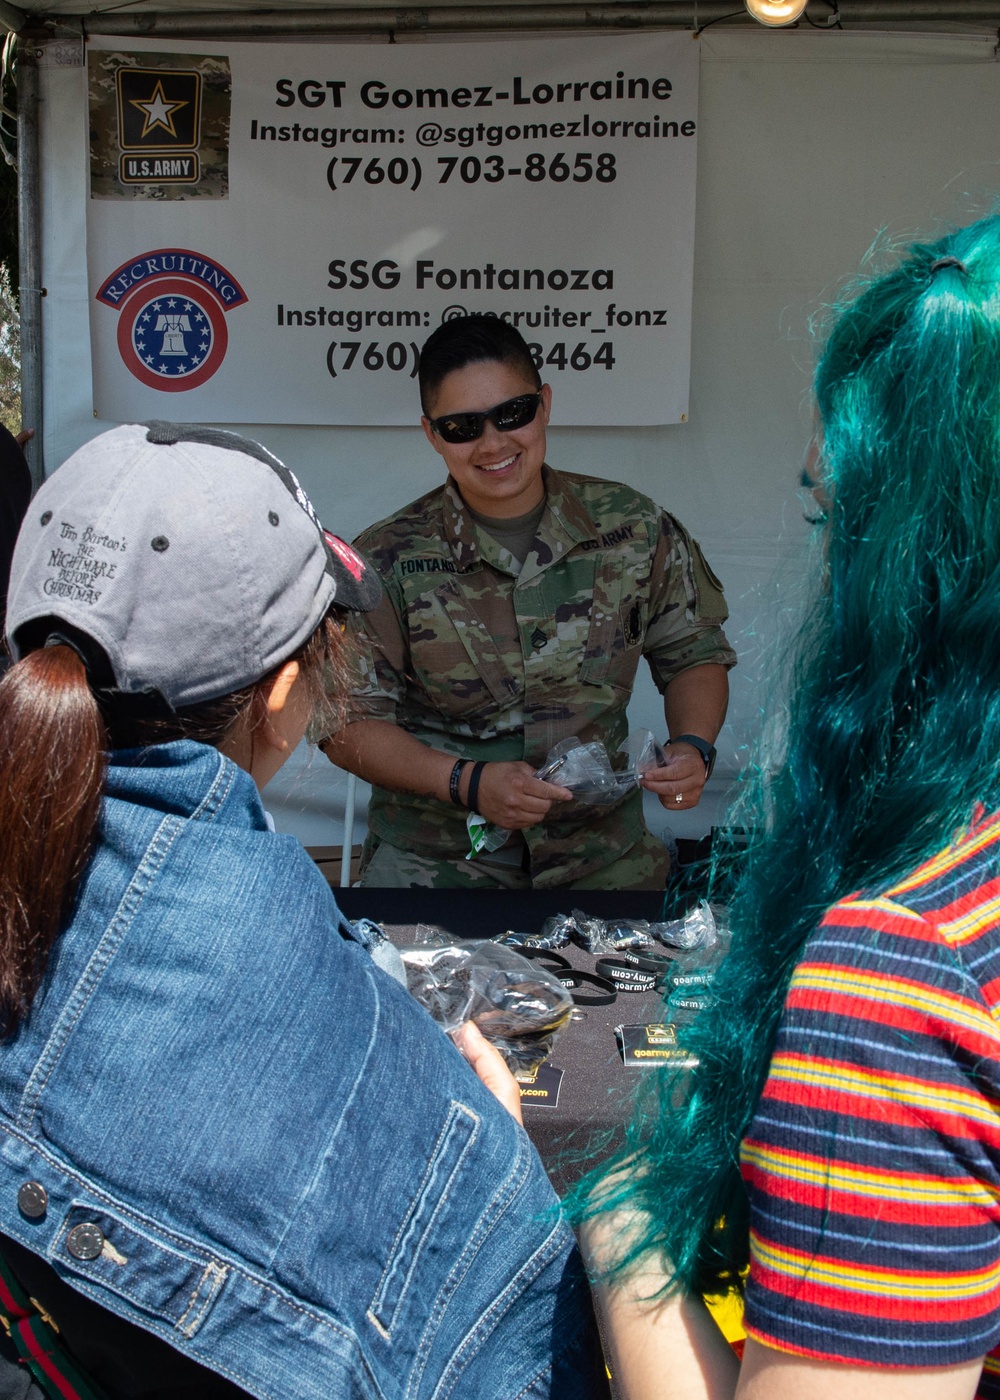 U.S. Army Recruiter at San Diego Pride Festival